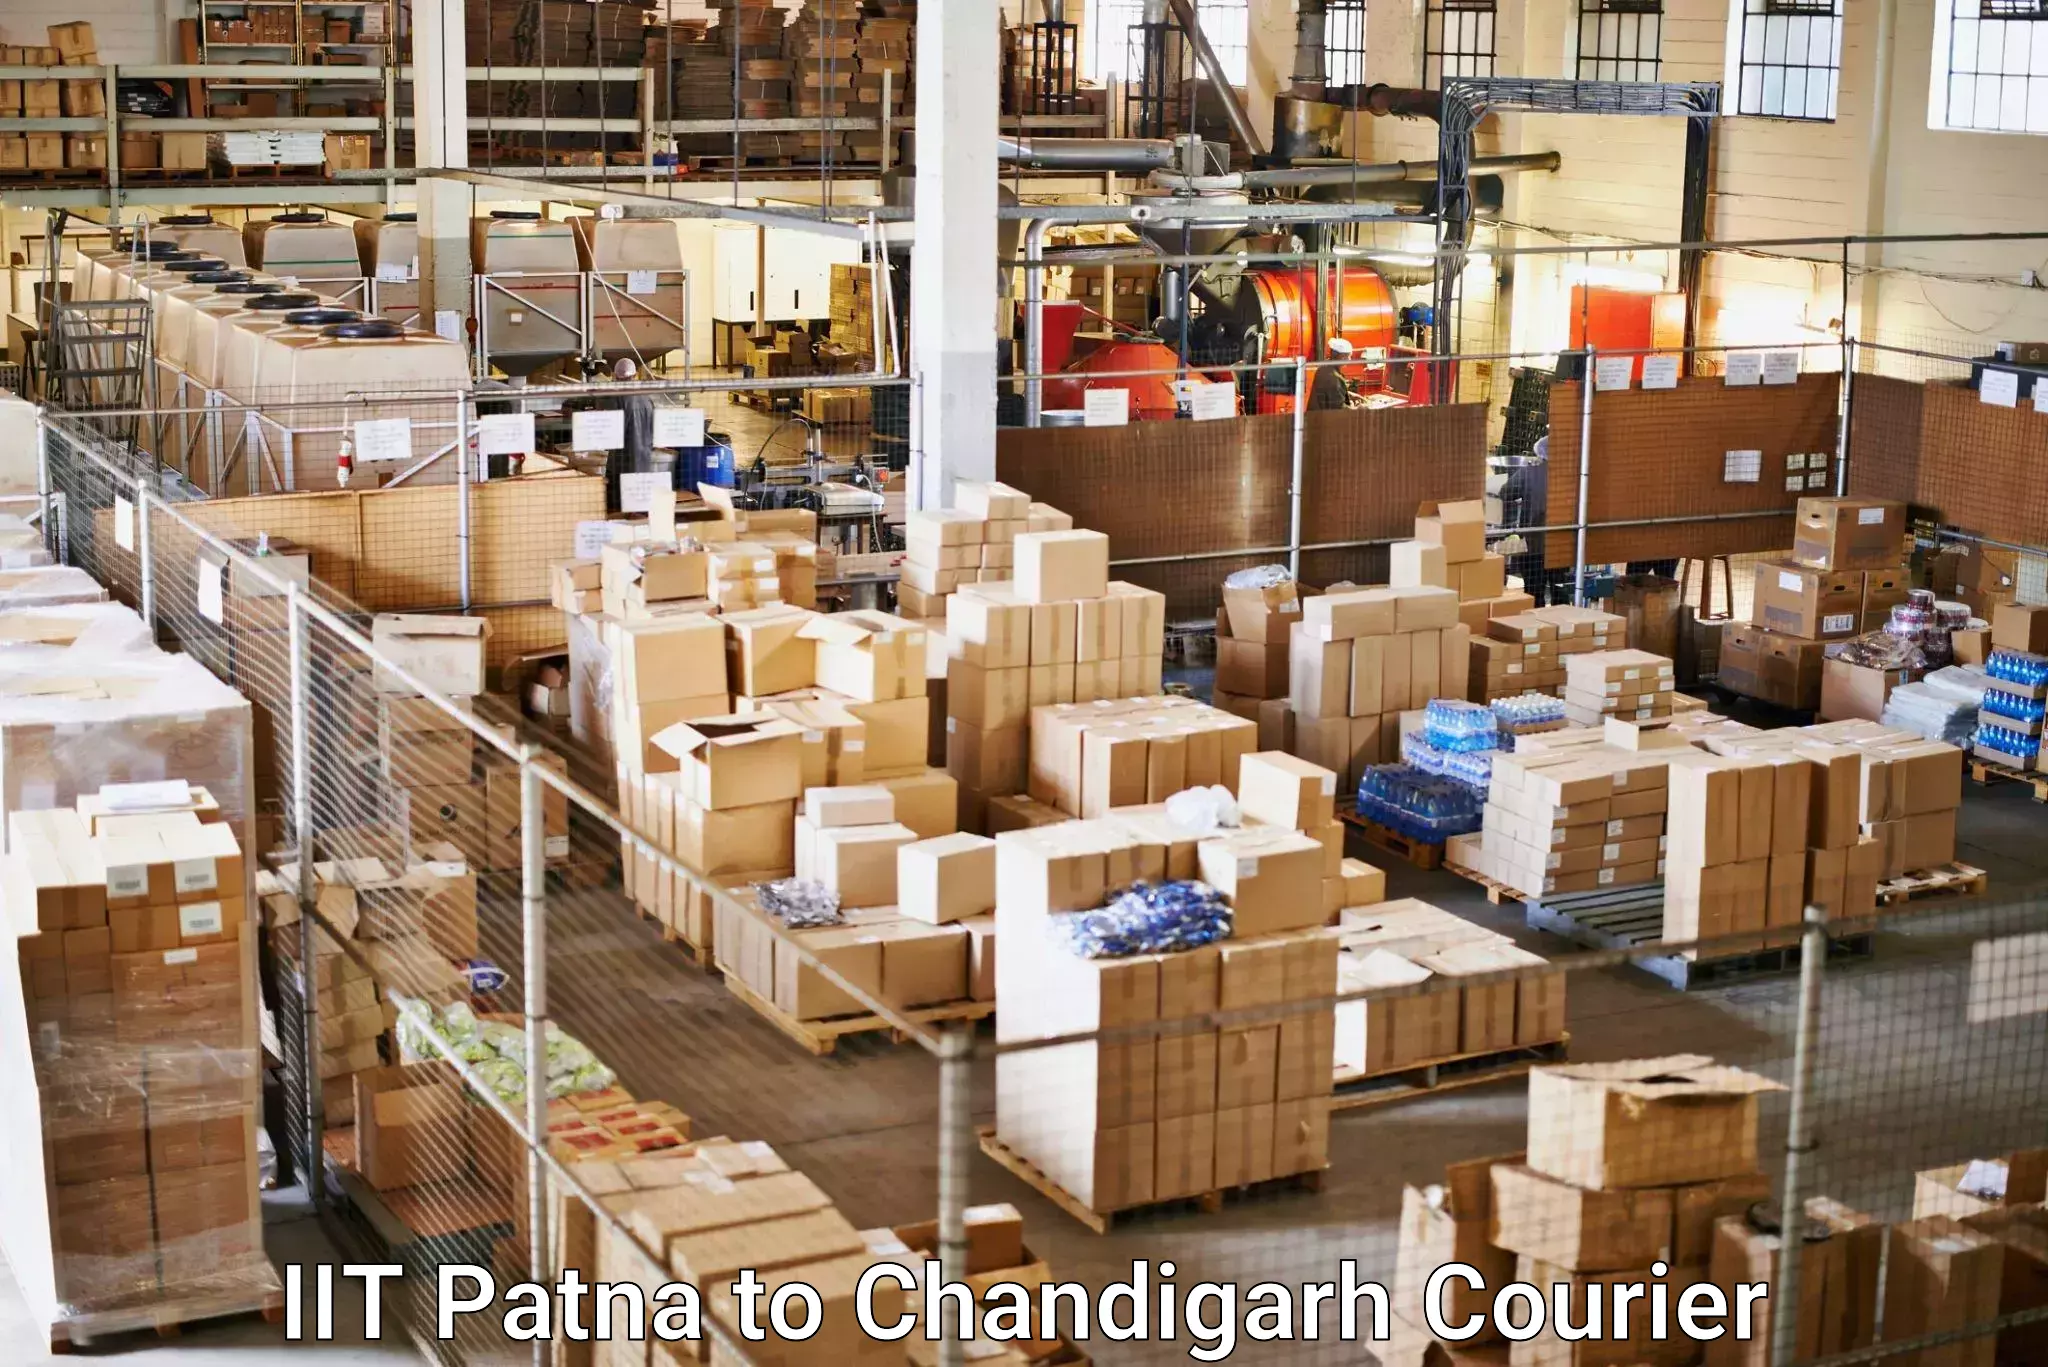 Ocean freight courier IIT Patna to Chandigarh